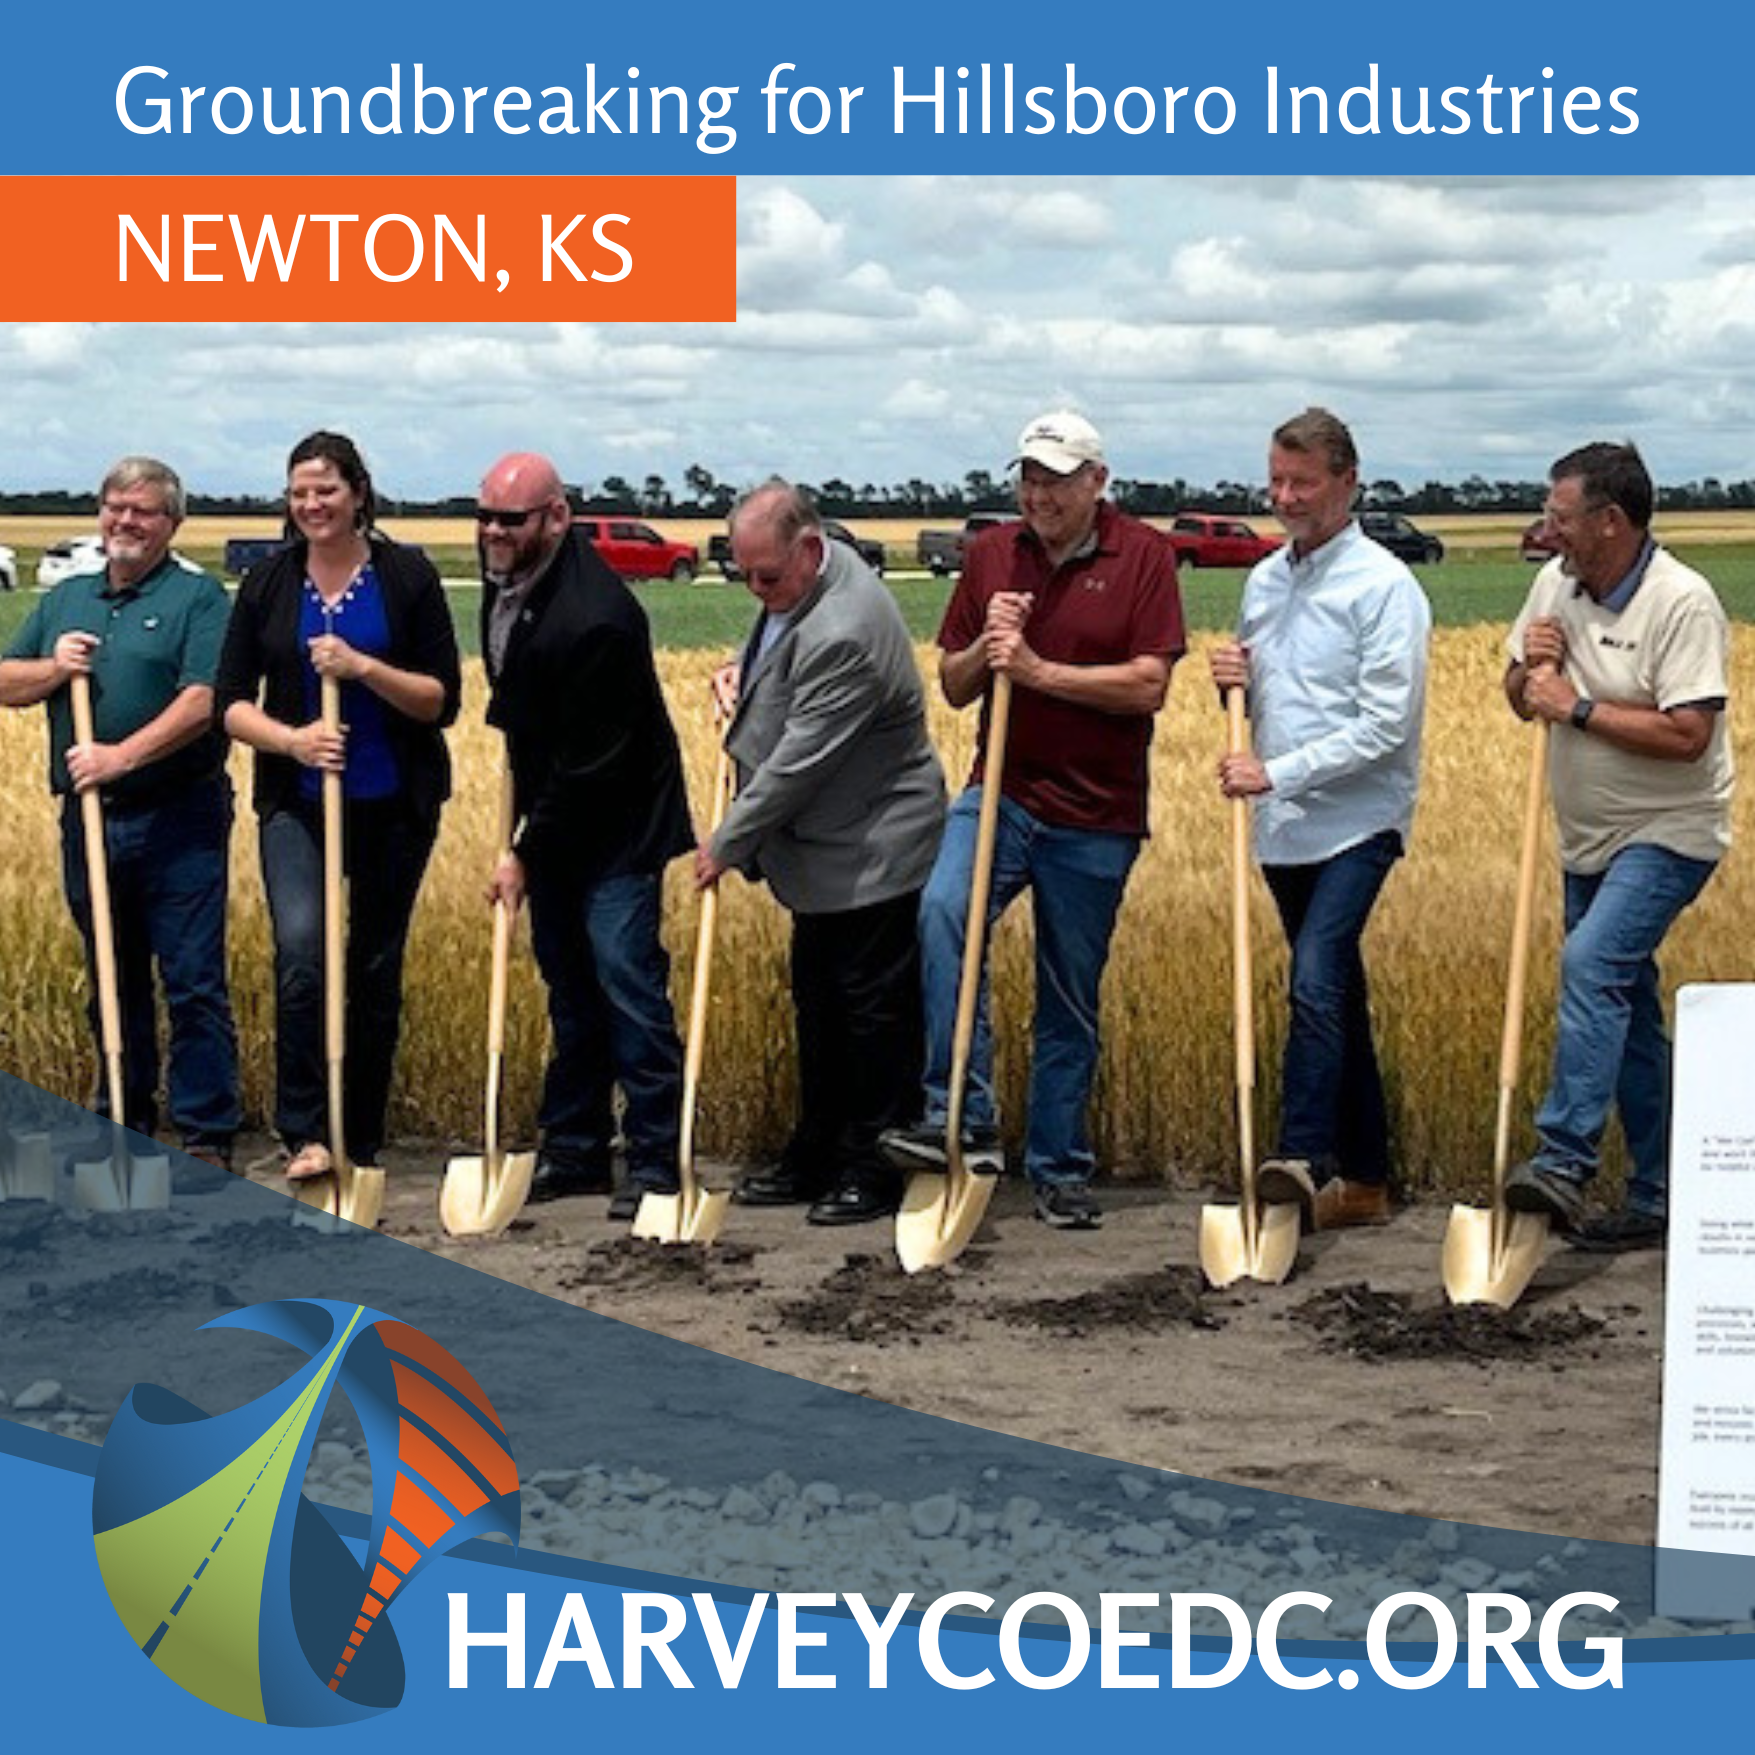 Groundbreaking Ceremony Held to Welcome Hillsboro Industries